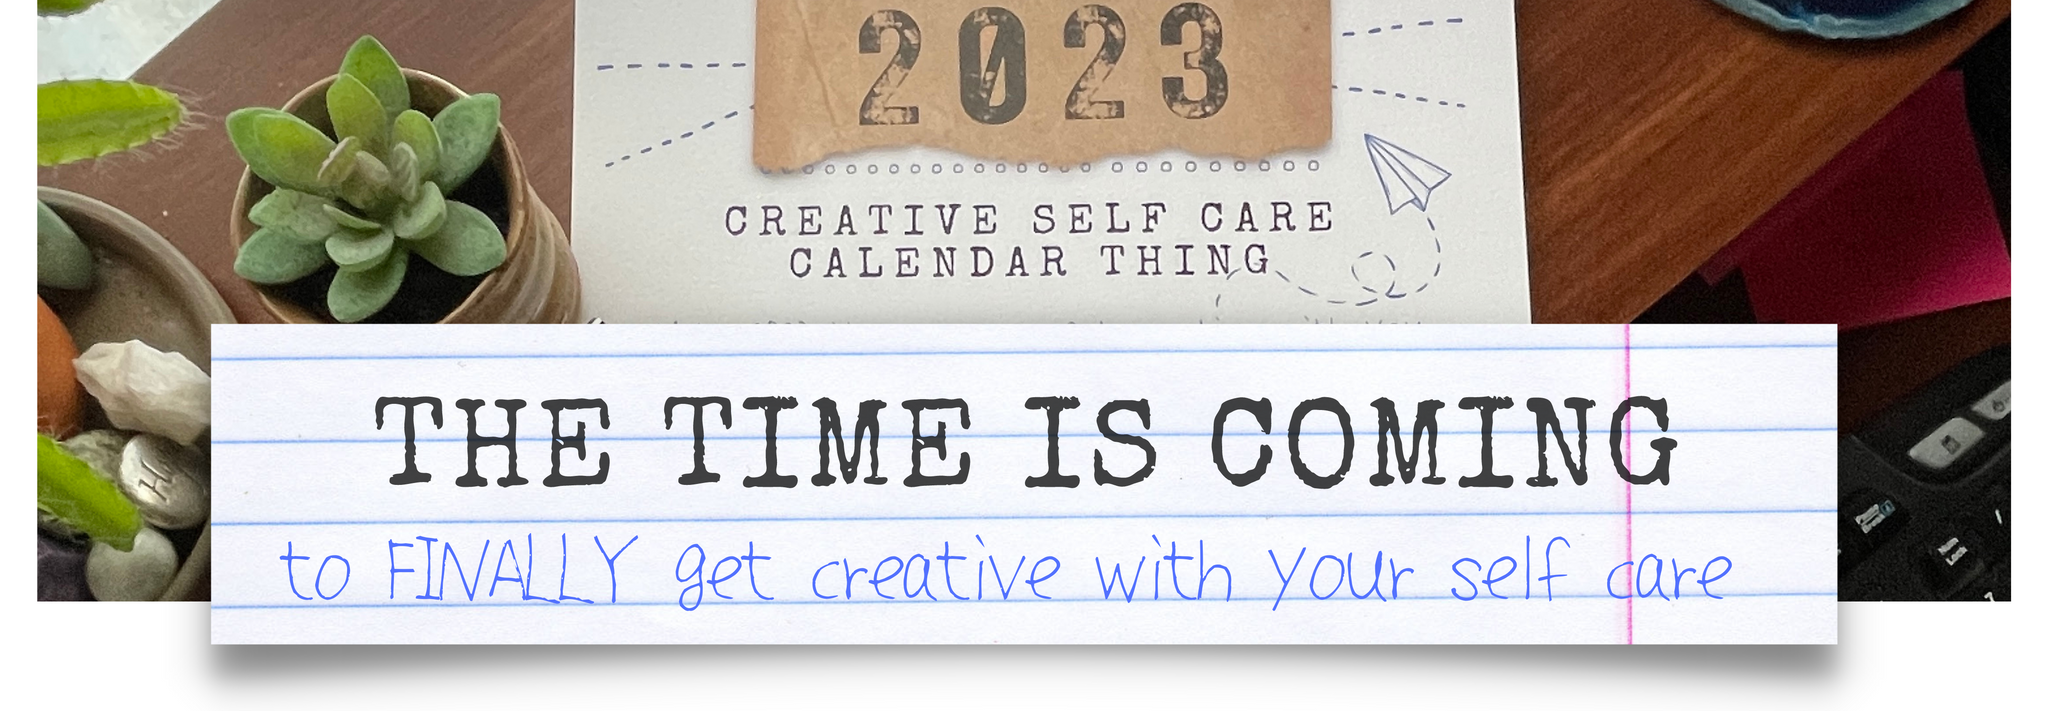 2023 creative self care calendar thing